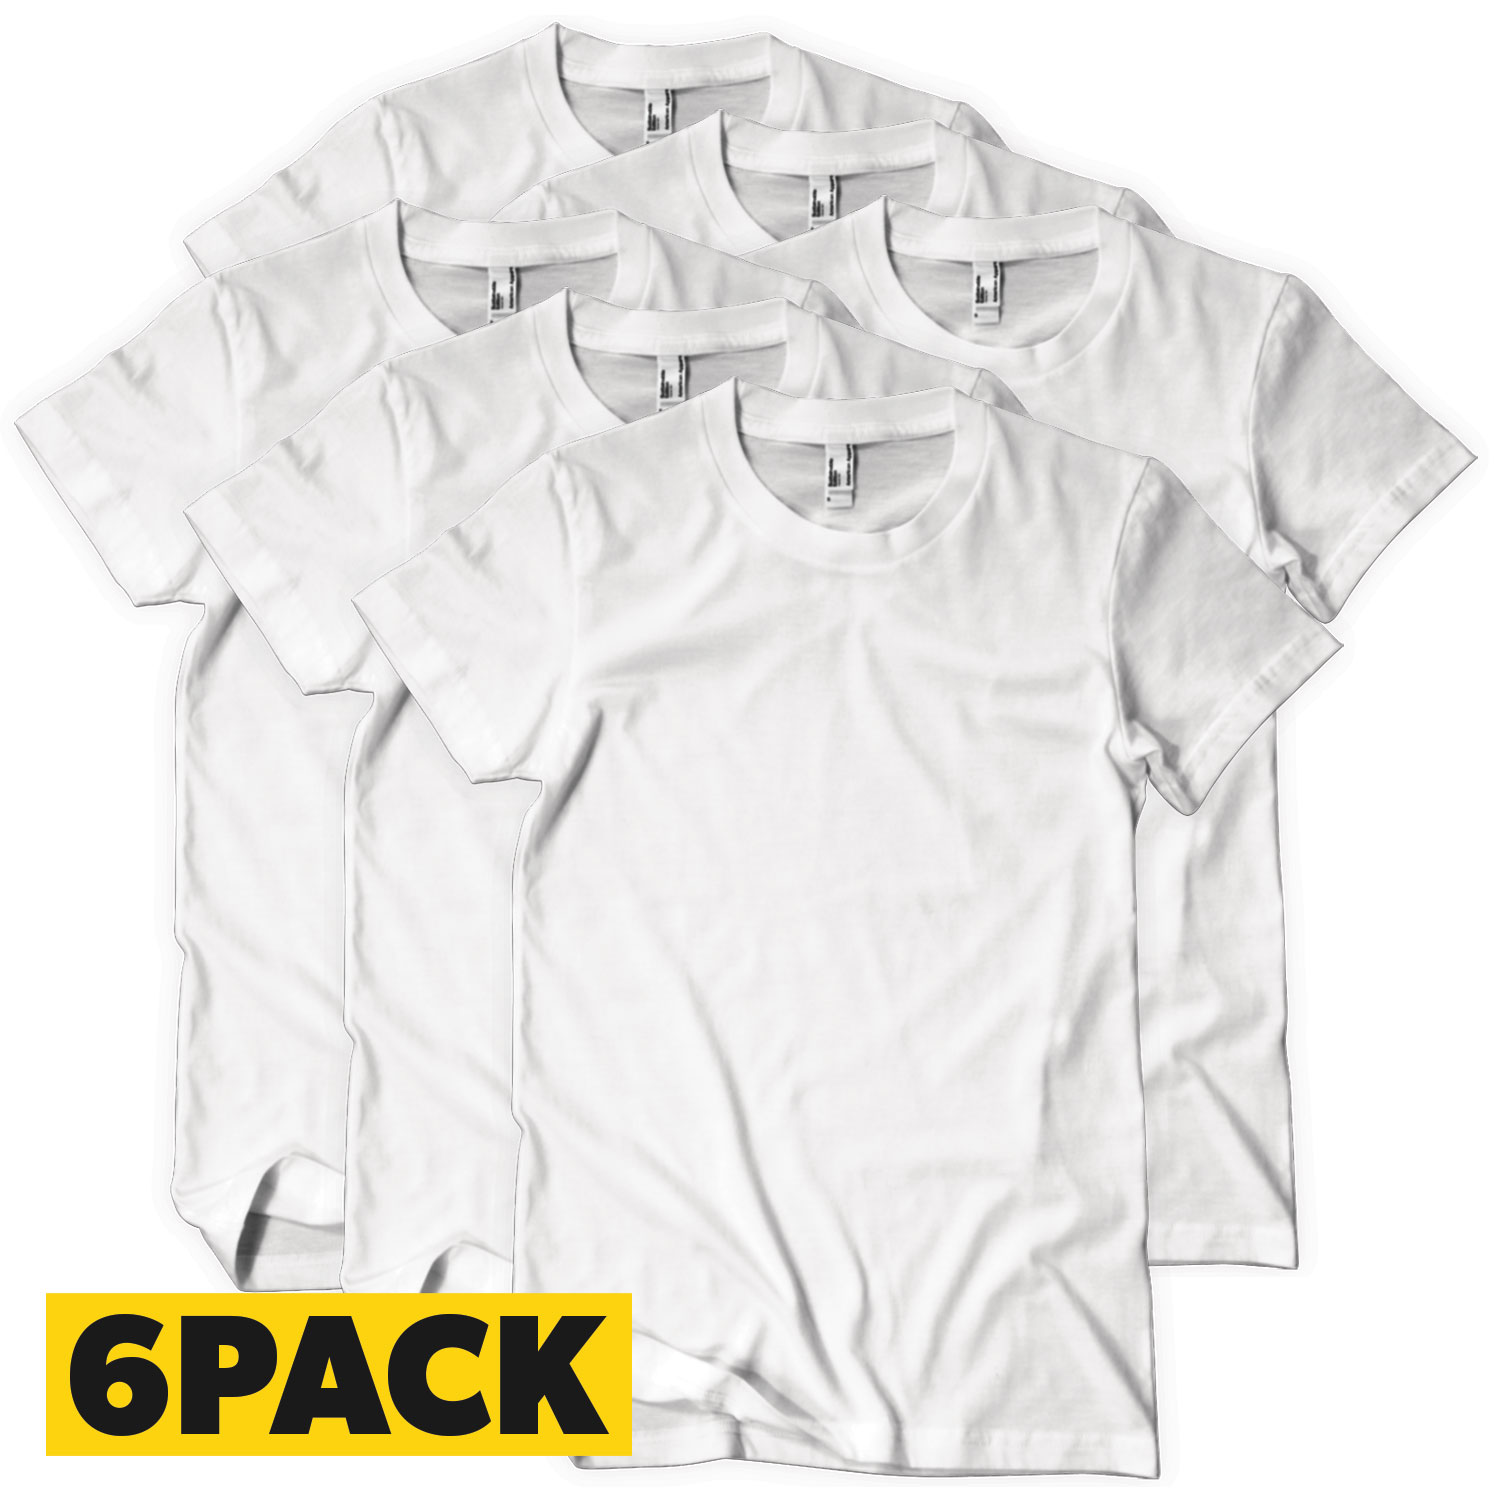 T-Shirts Bigpack White - 6 pack